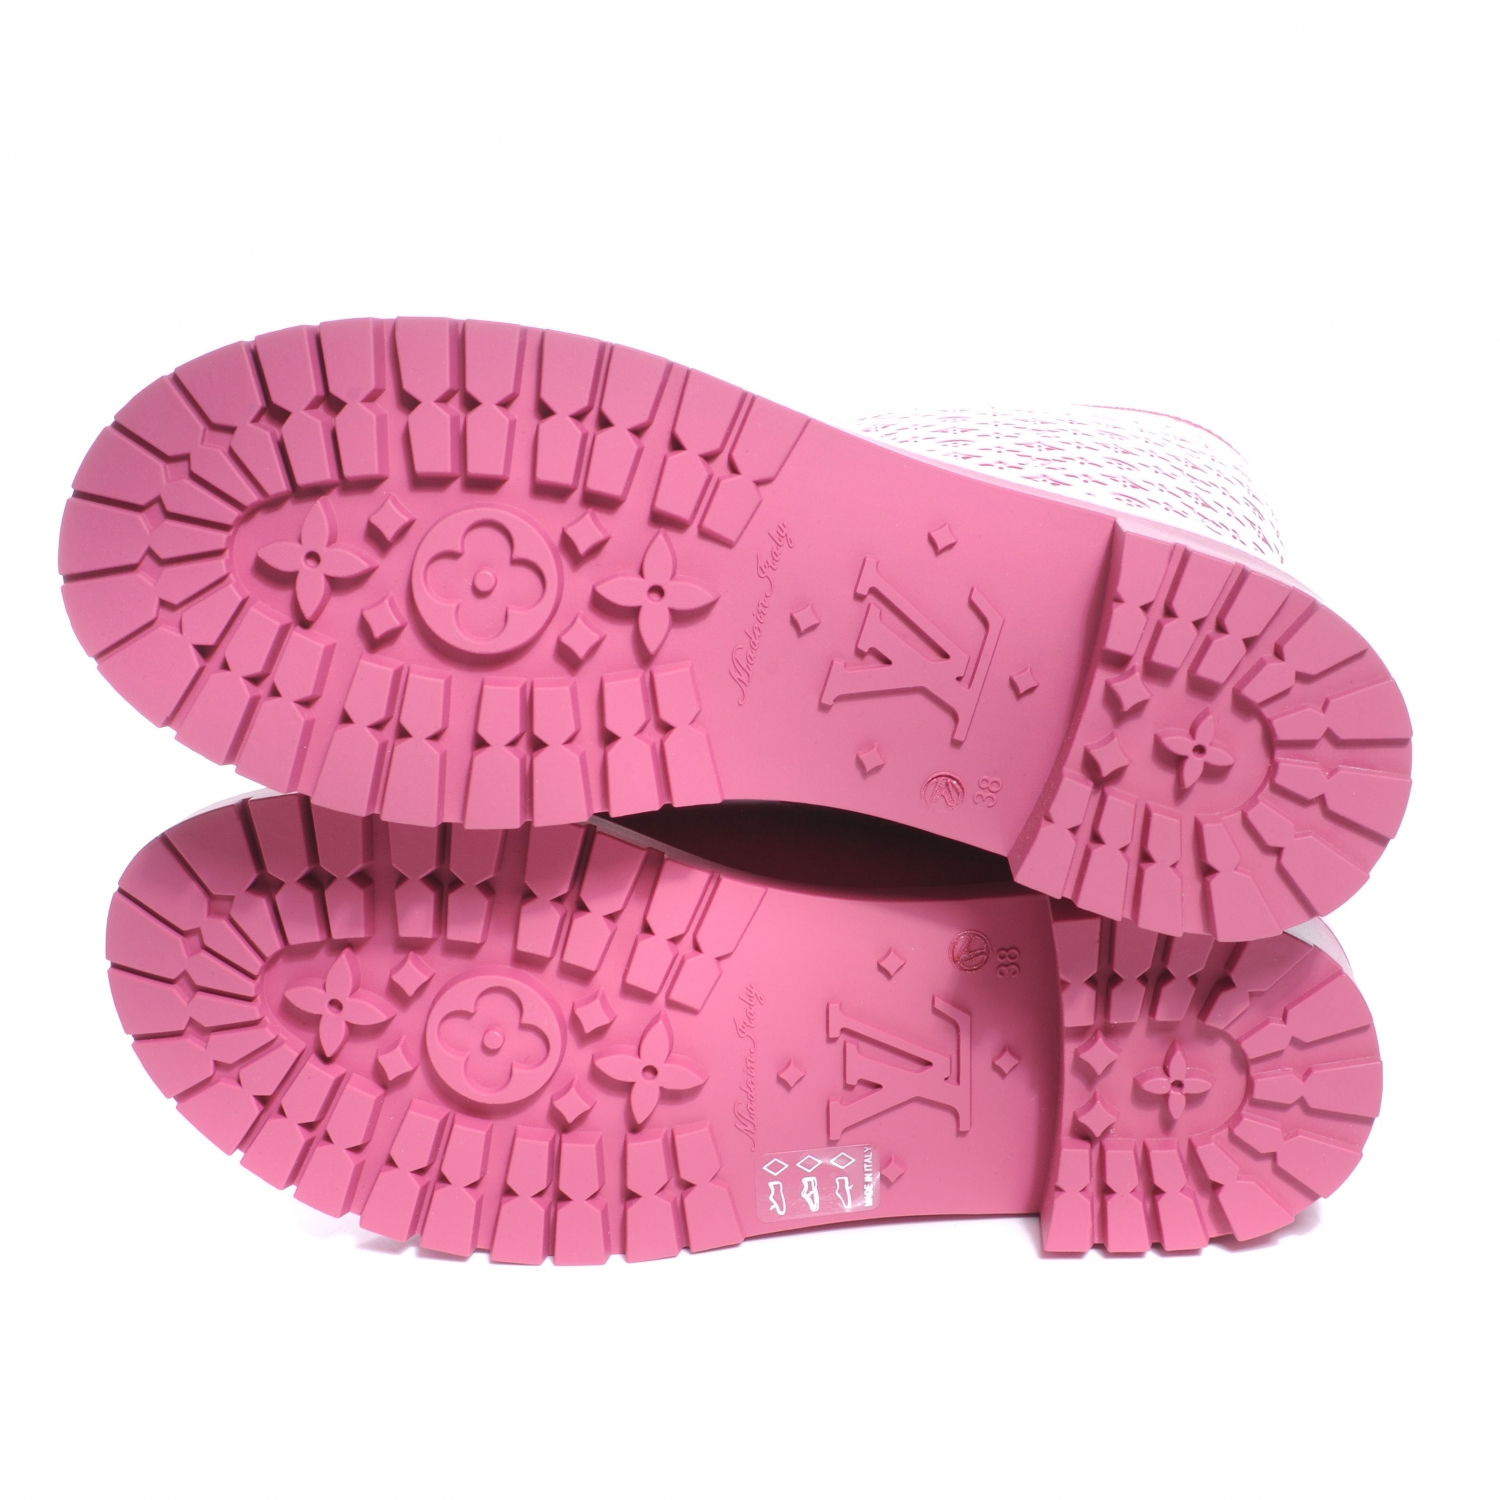 LOUIS VUITTON Rubber Monogram Splash High Boots Pink 49575